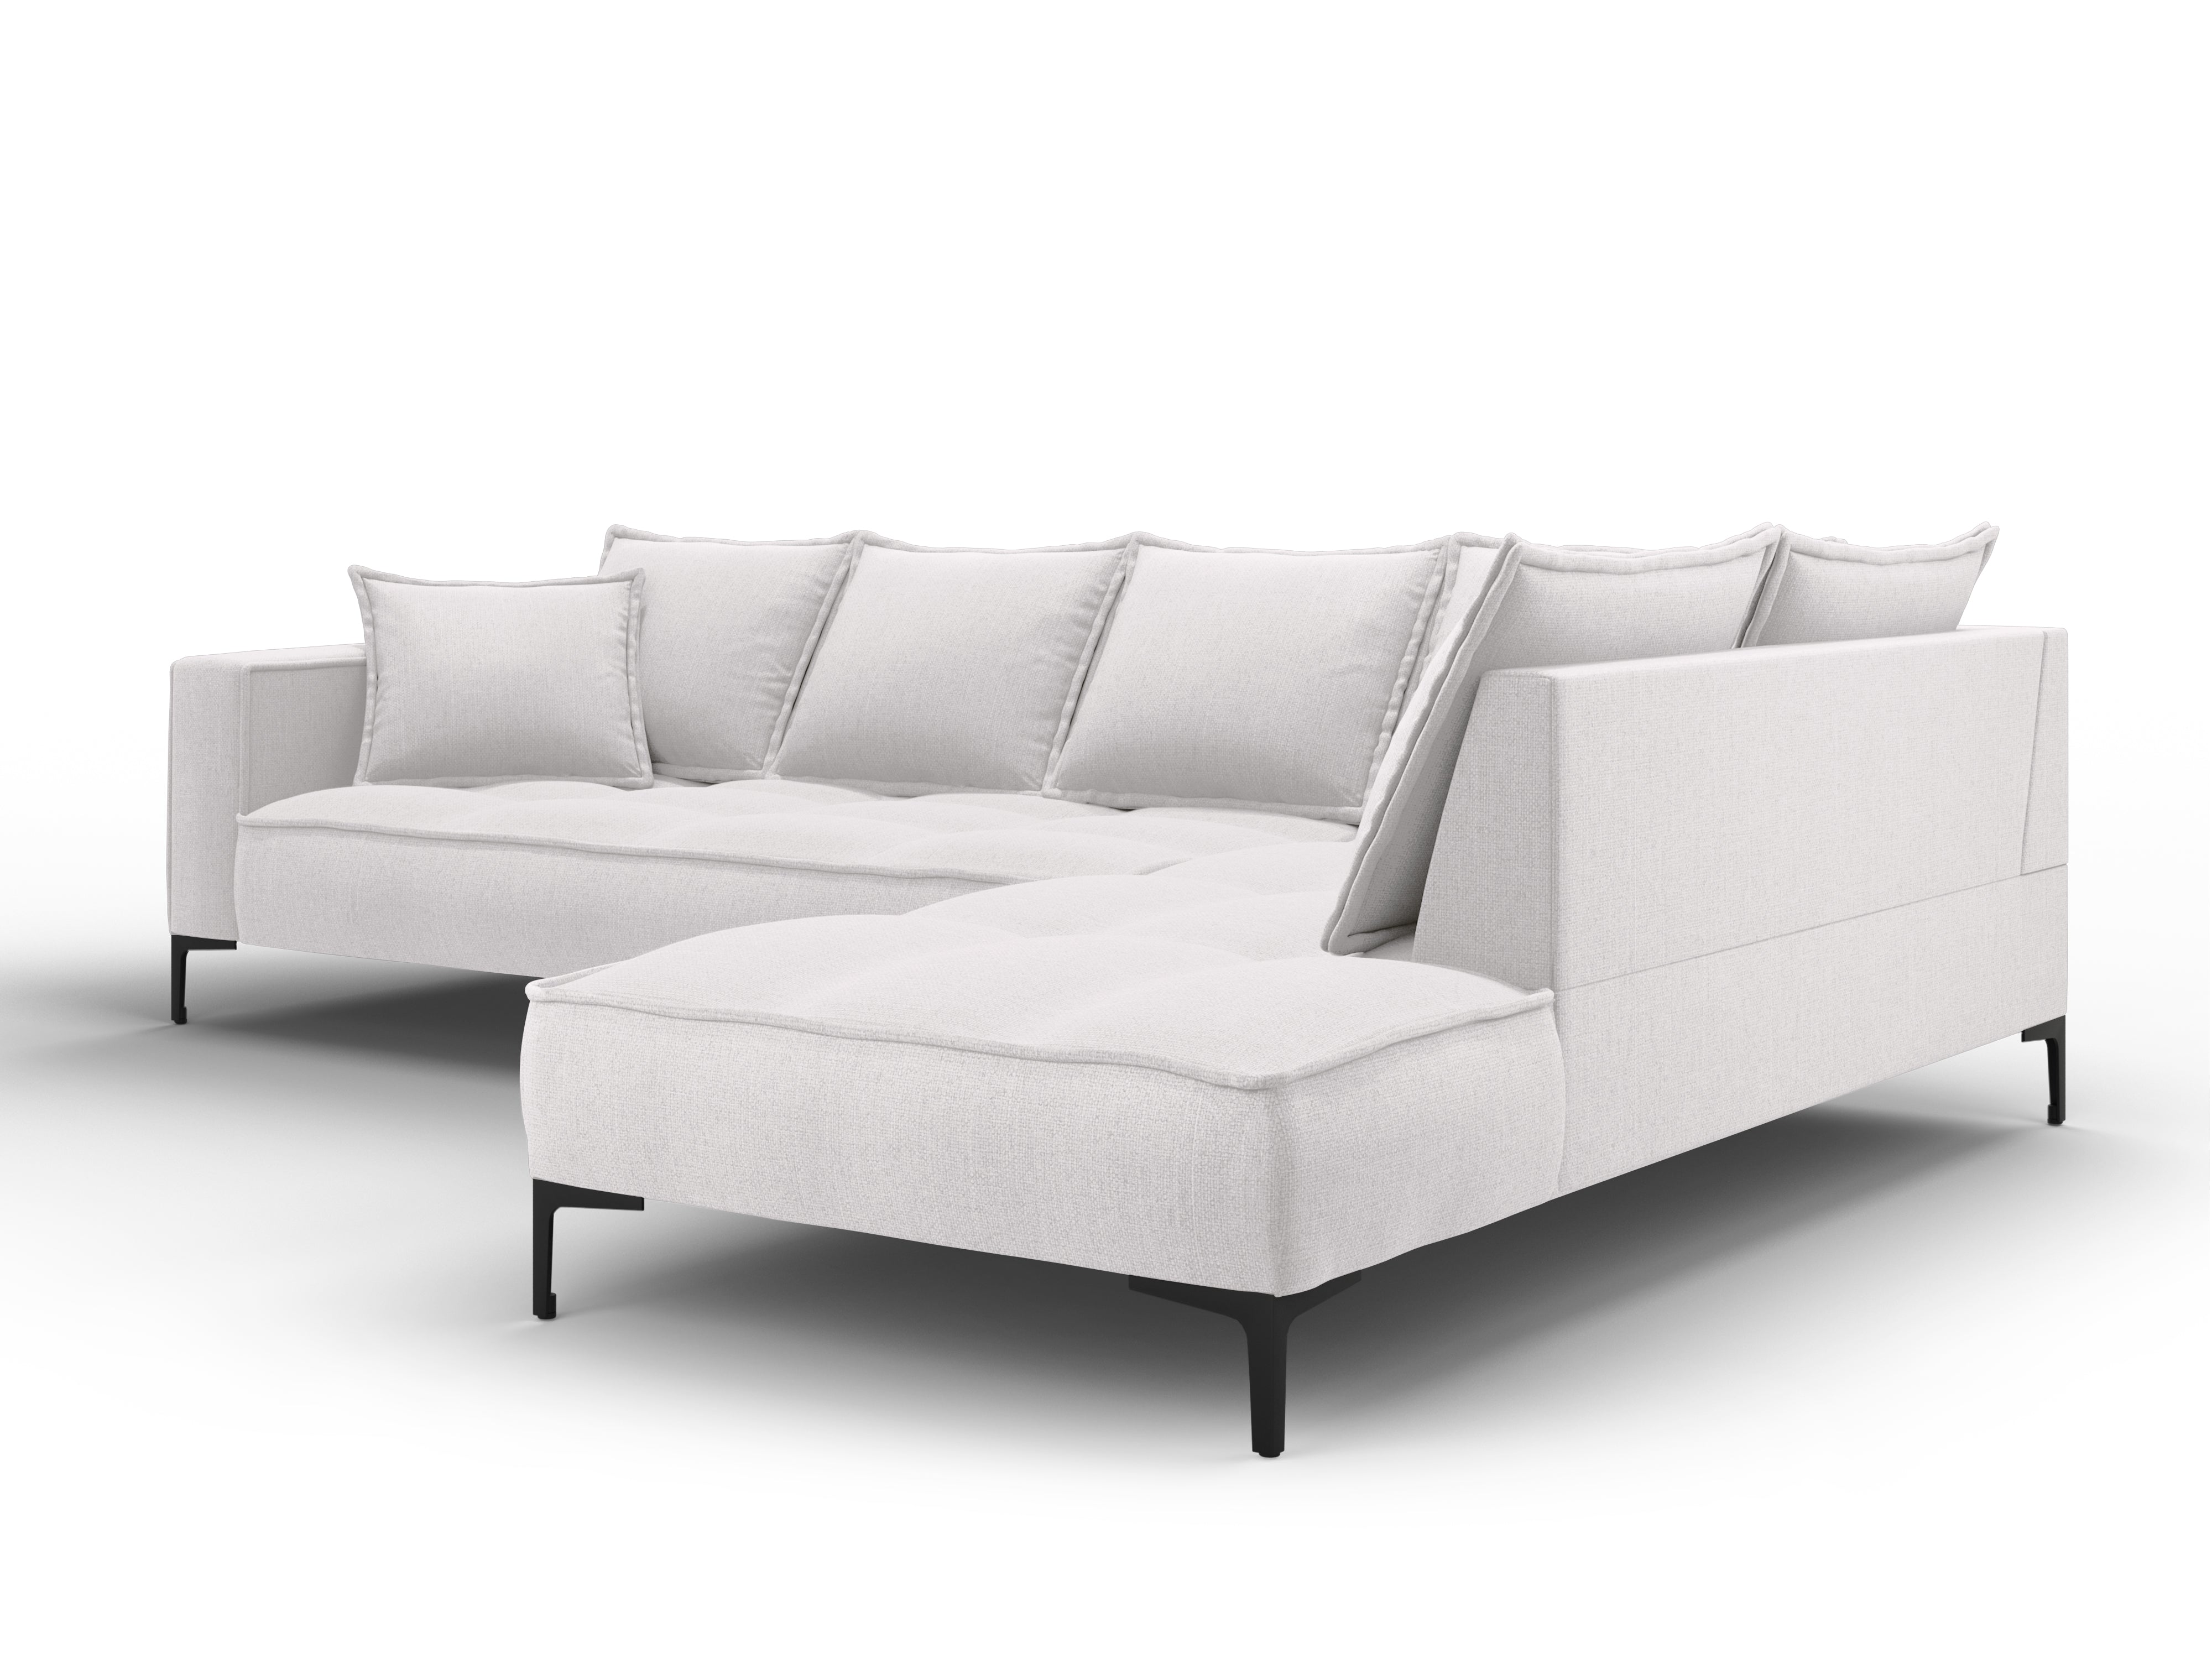 Right corner sofa MARRAM light grey with black base